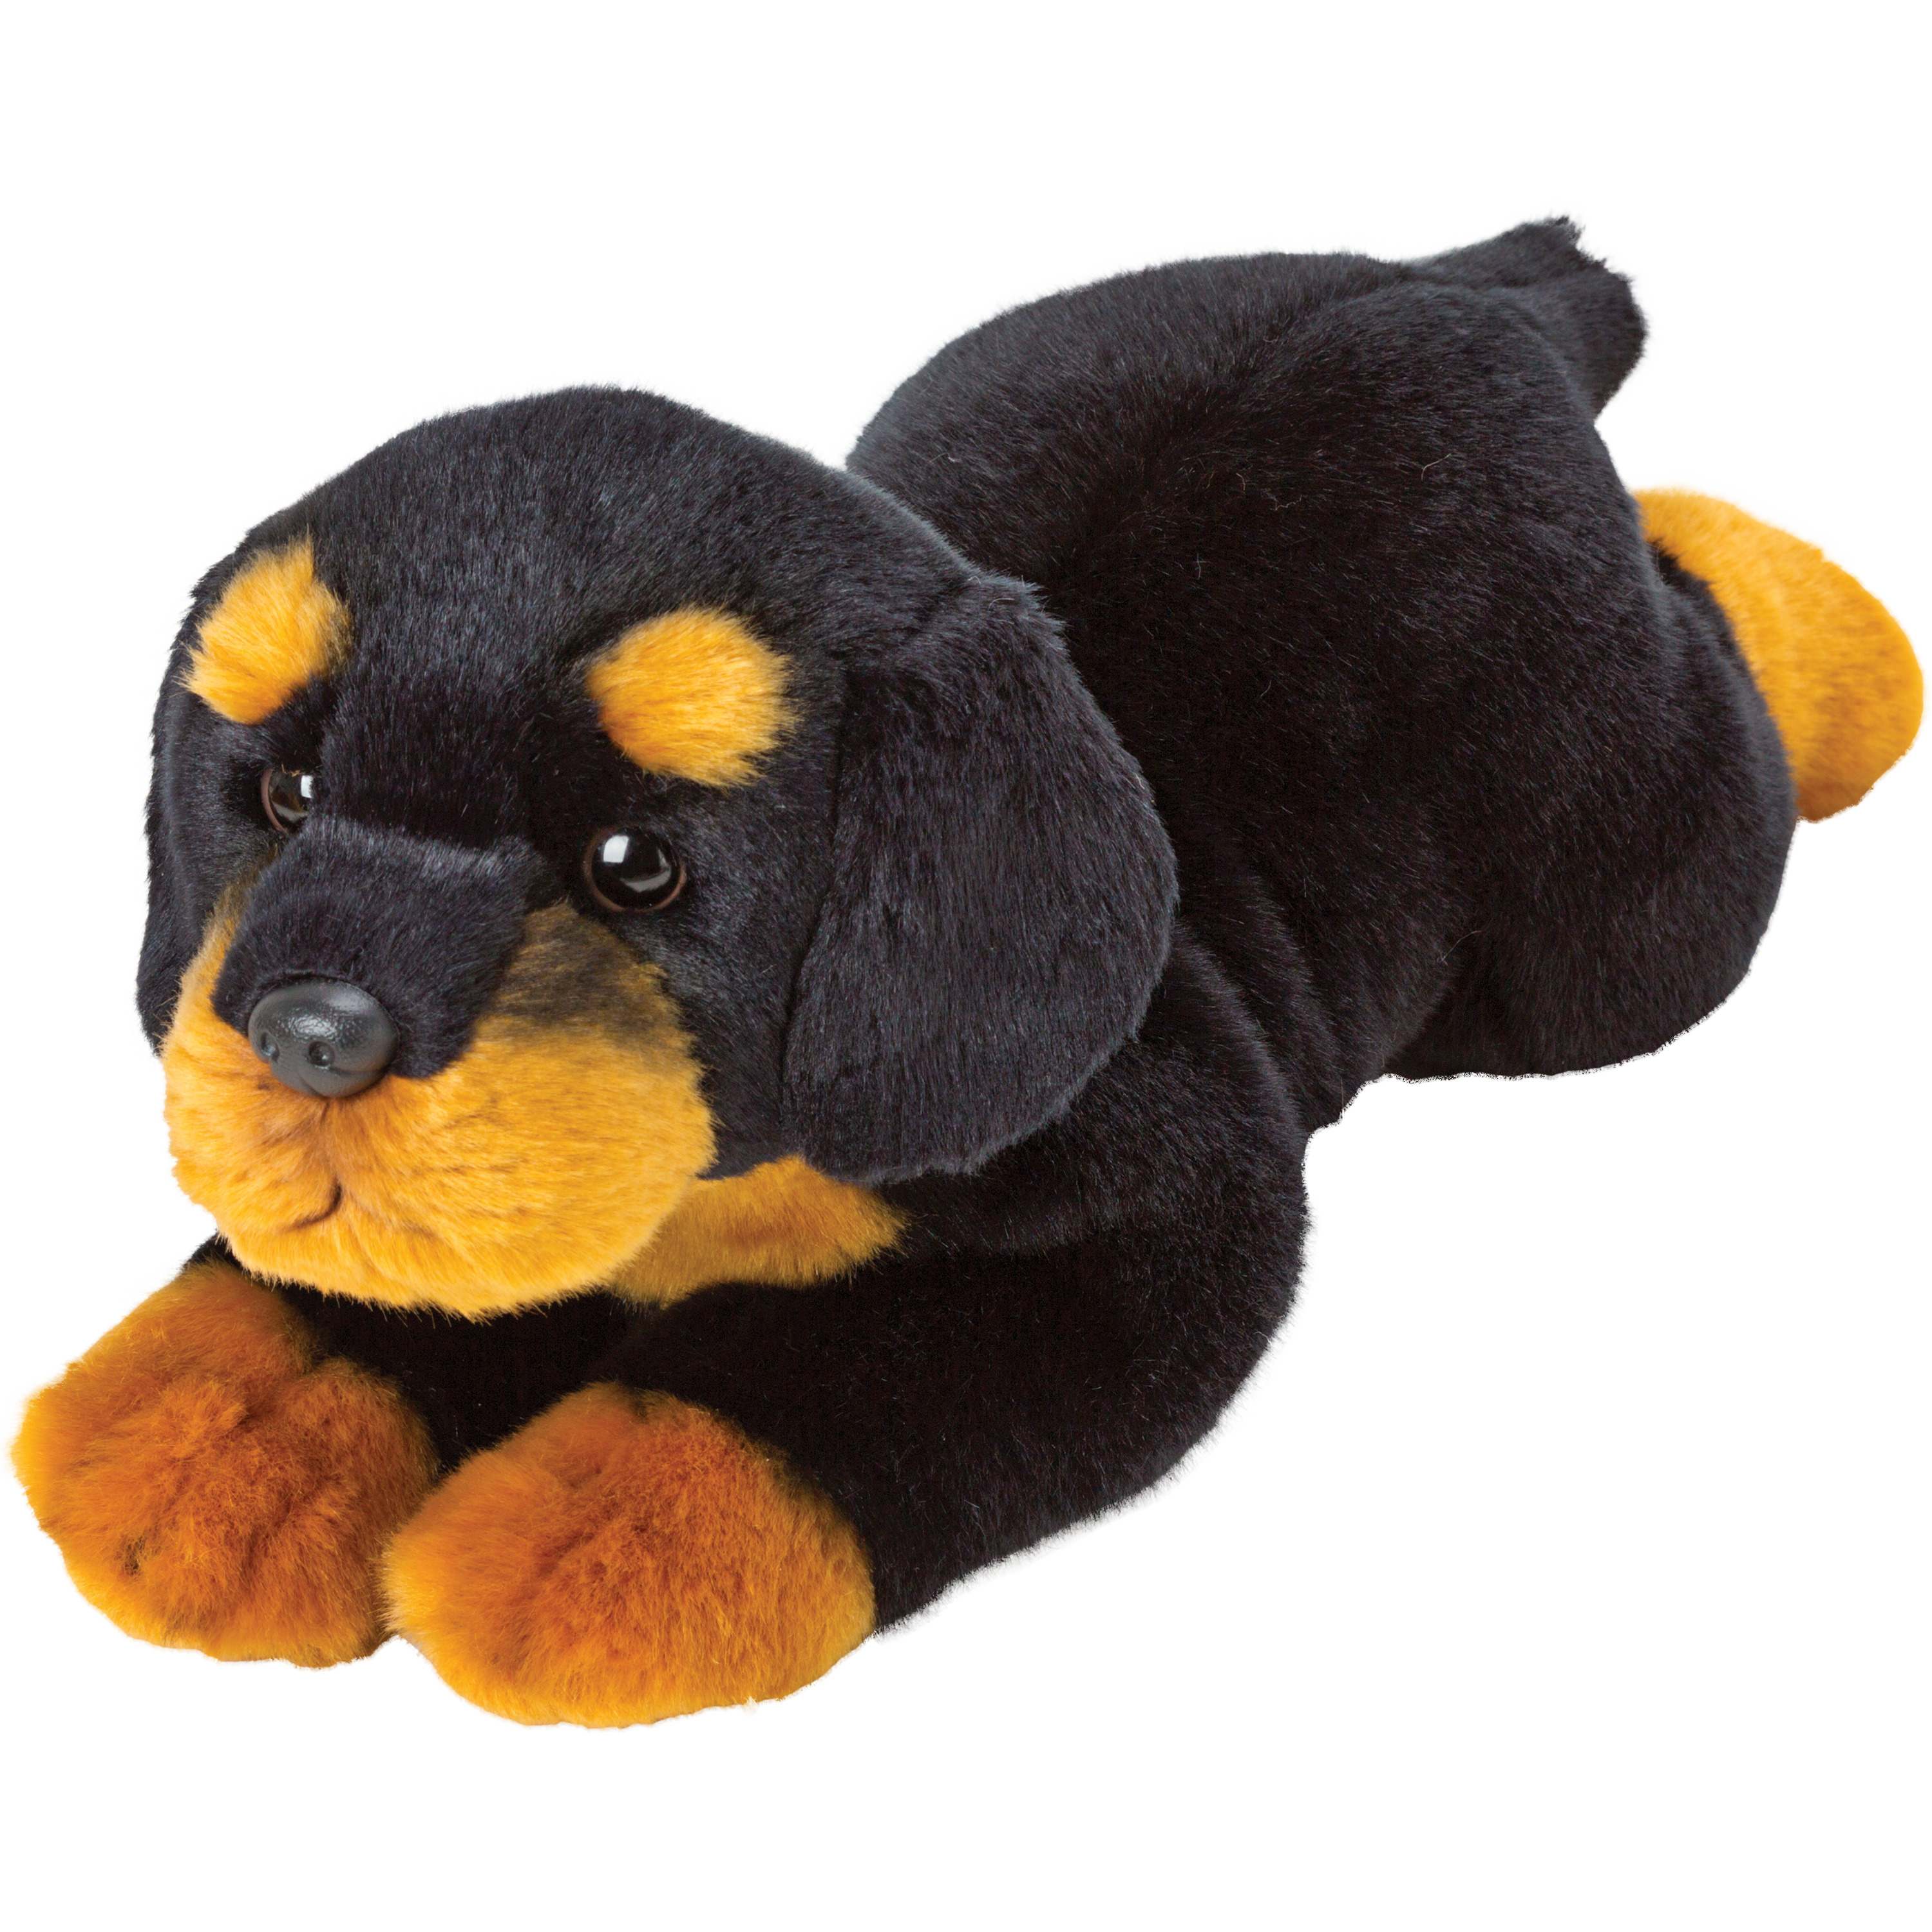 Pluche knuffel dieren Rottweiler hond 34 cm - Speelgoed knuffelbeesten - Honden soorten